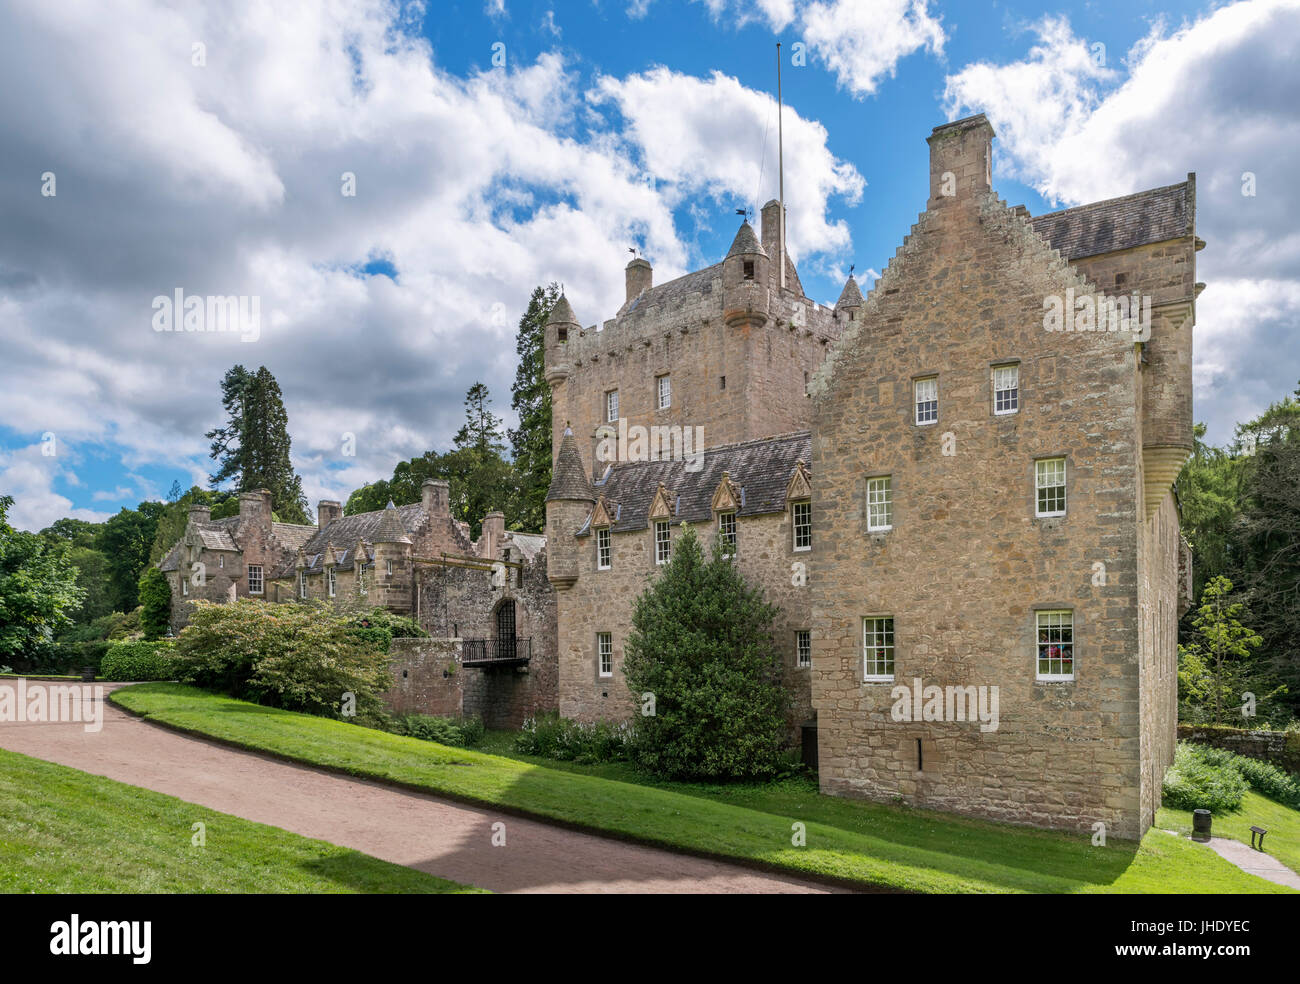 Le Château de Cawdor, Cawdor, Nairn, Highland, Scotland, UK Banque D'Images